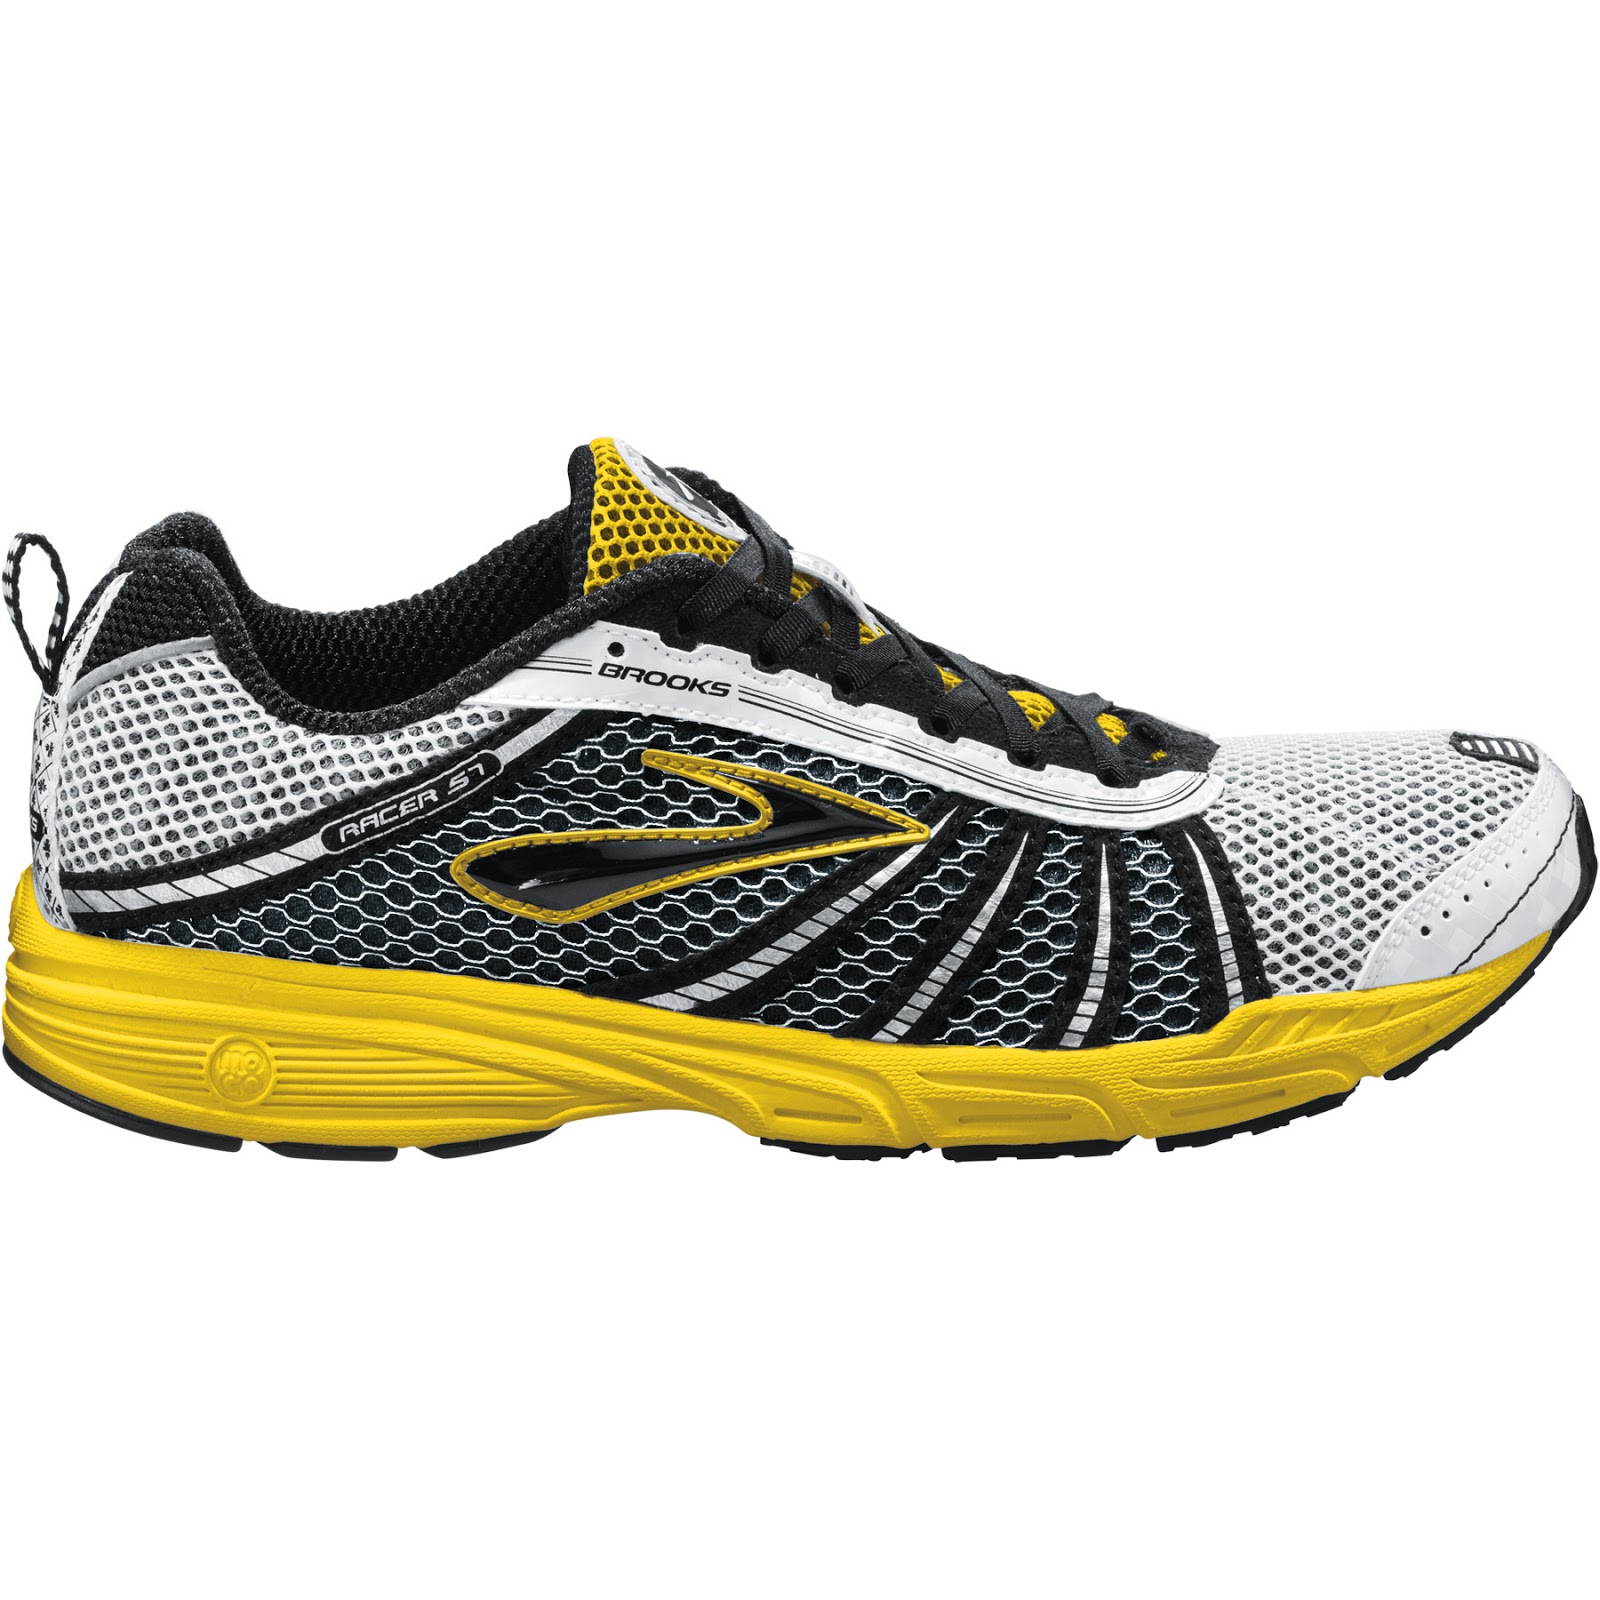 The Running Shoe Guru: Marathon Shoes - the best racing shoes for ...